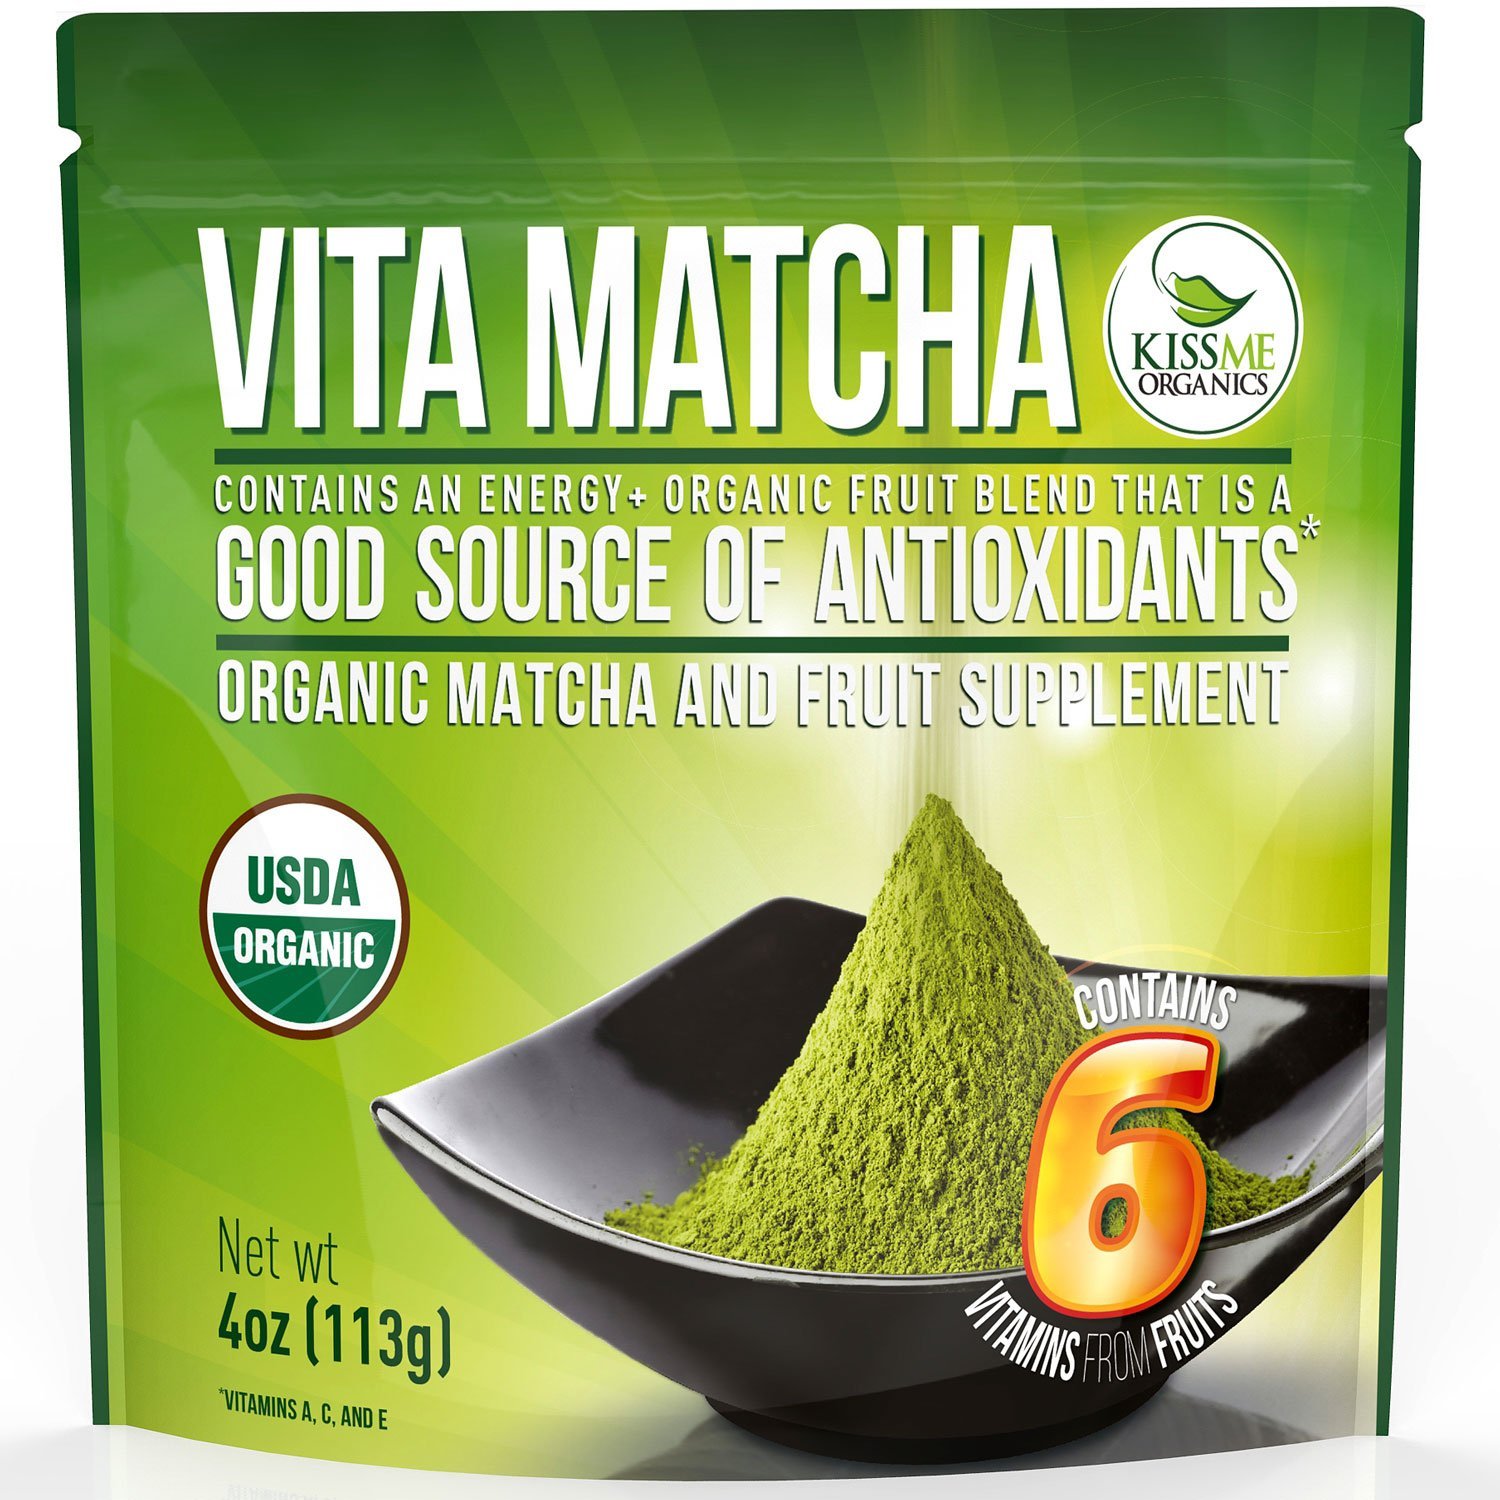 Vita Matcha Vitamin Infused Natural Detoxifier and Fat Burner - 4-Ounce bag (113 grams)